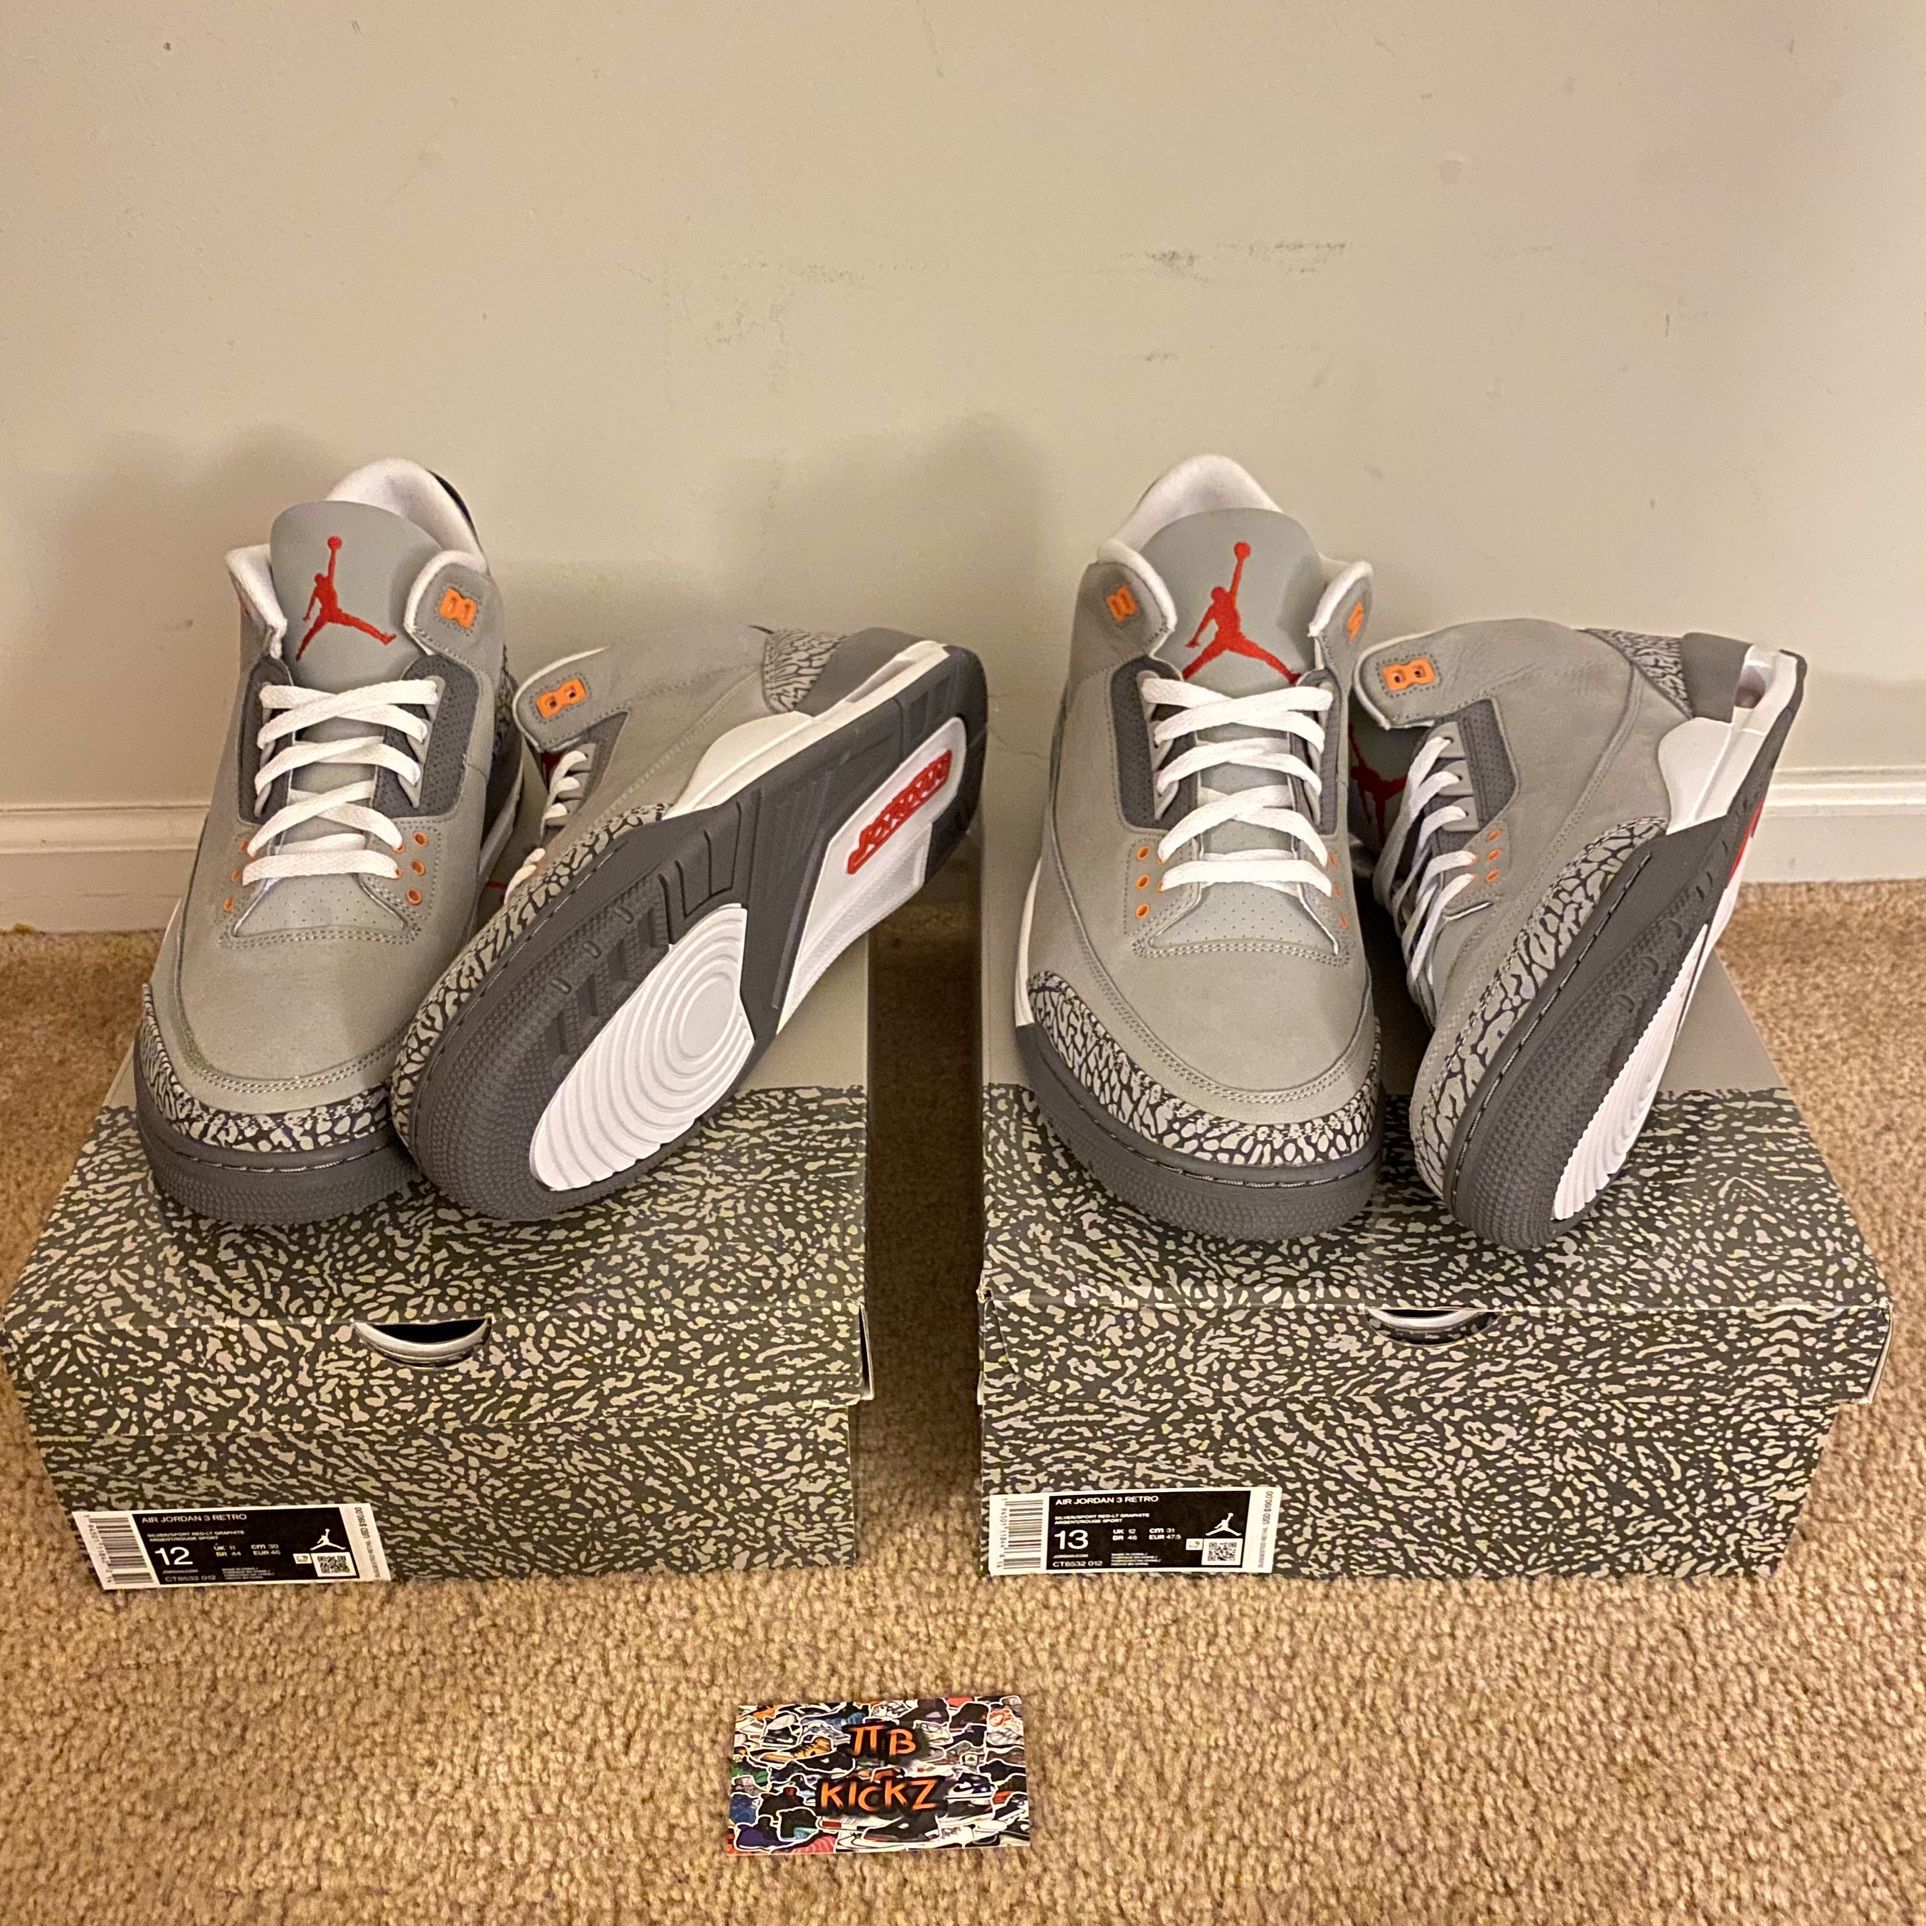 Jordan 3 “Cool Grey” Brand New Sizes 12 & 13